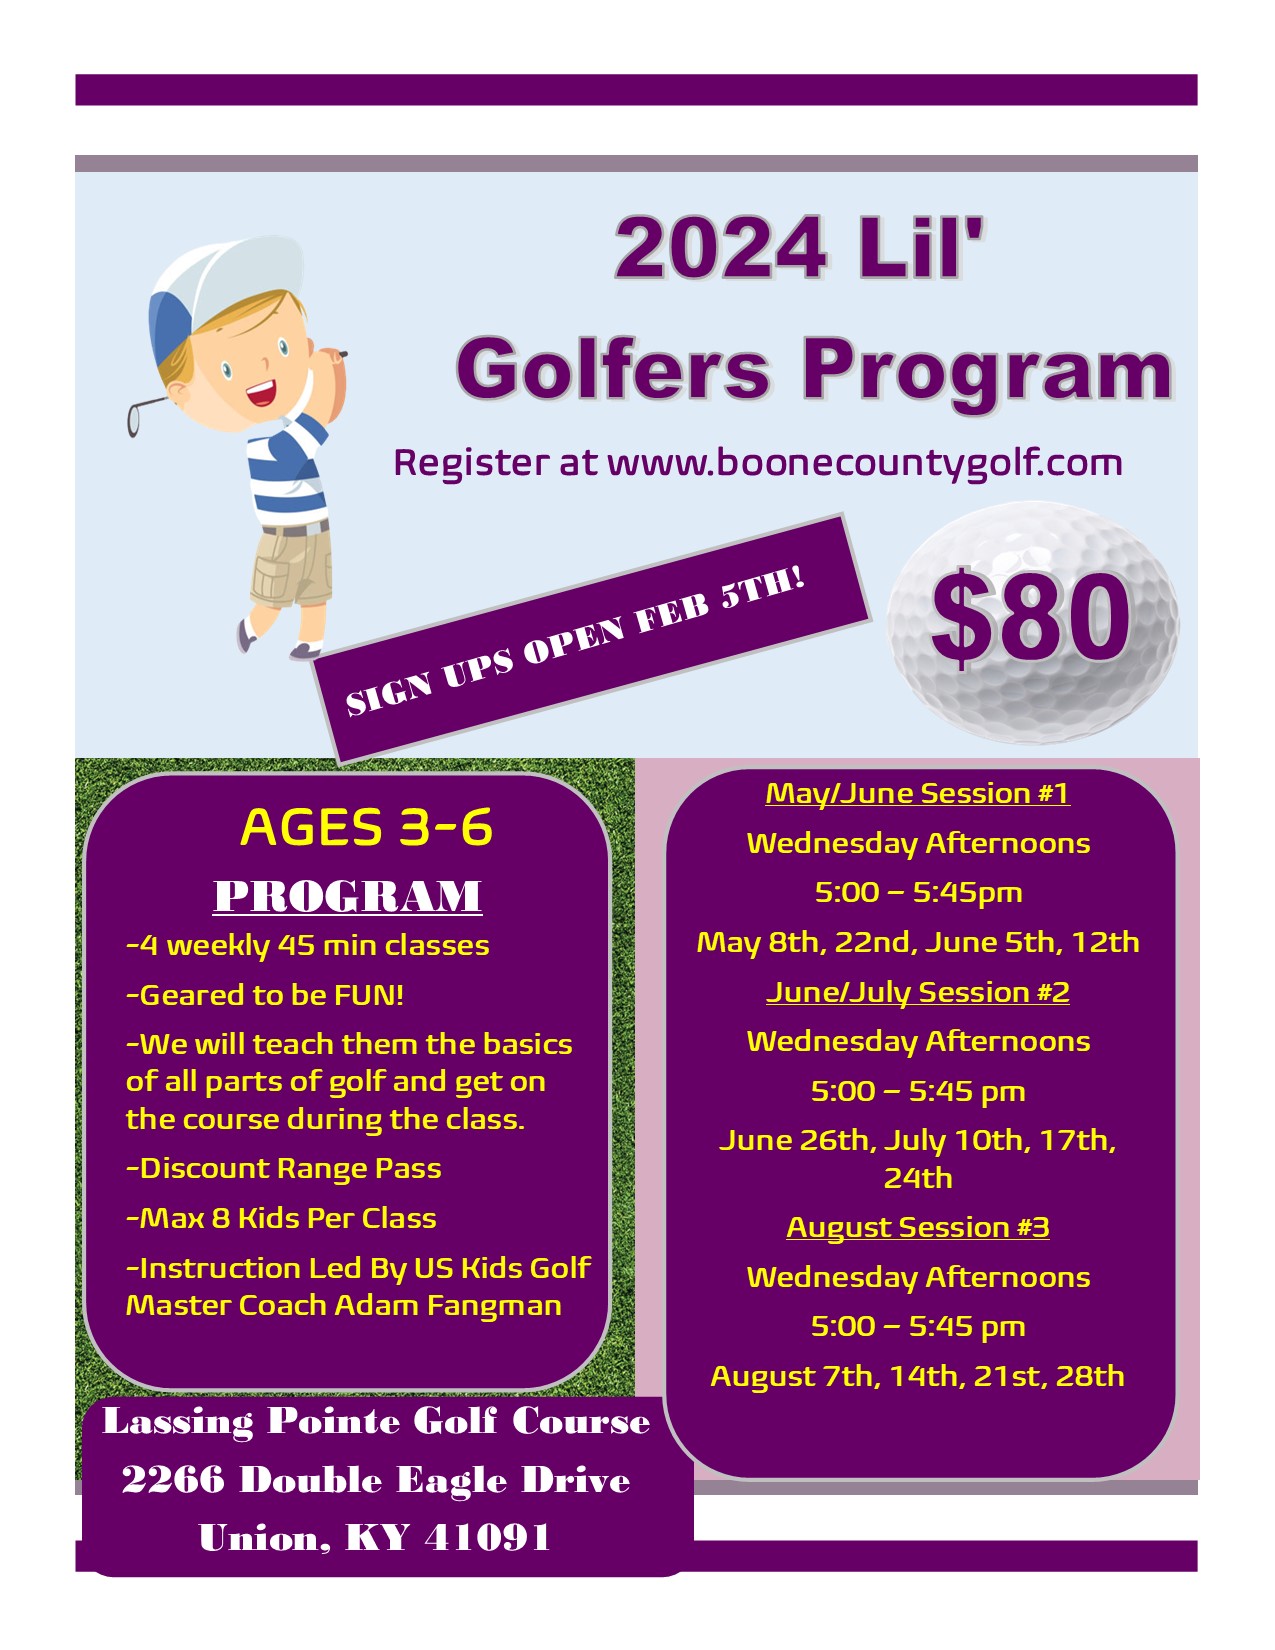 2024 Lil Golfers Program